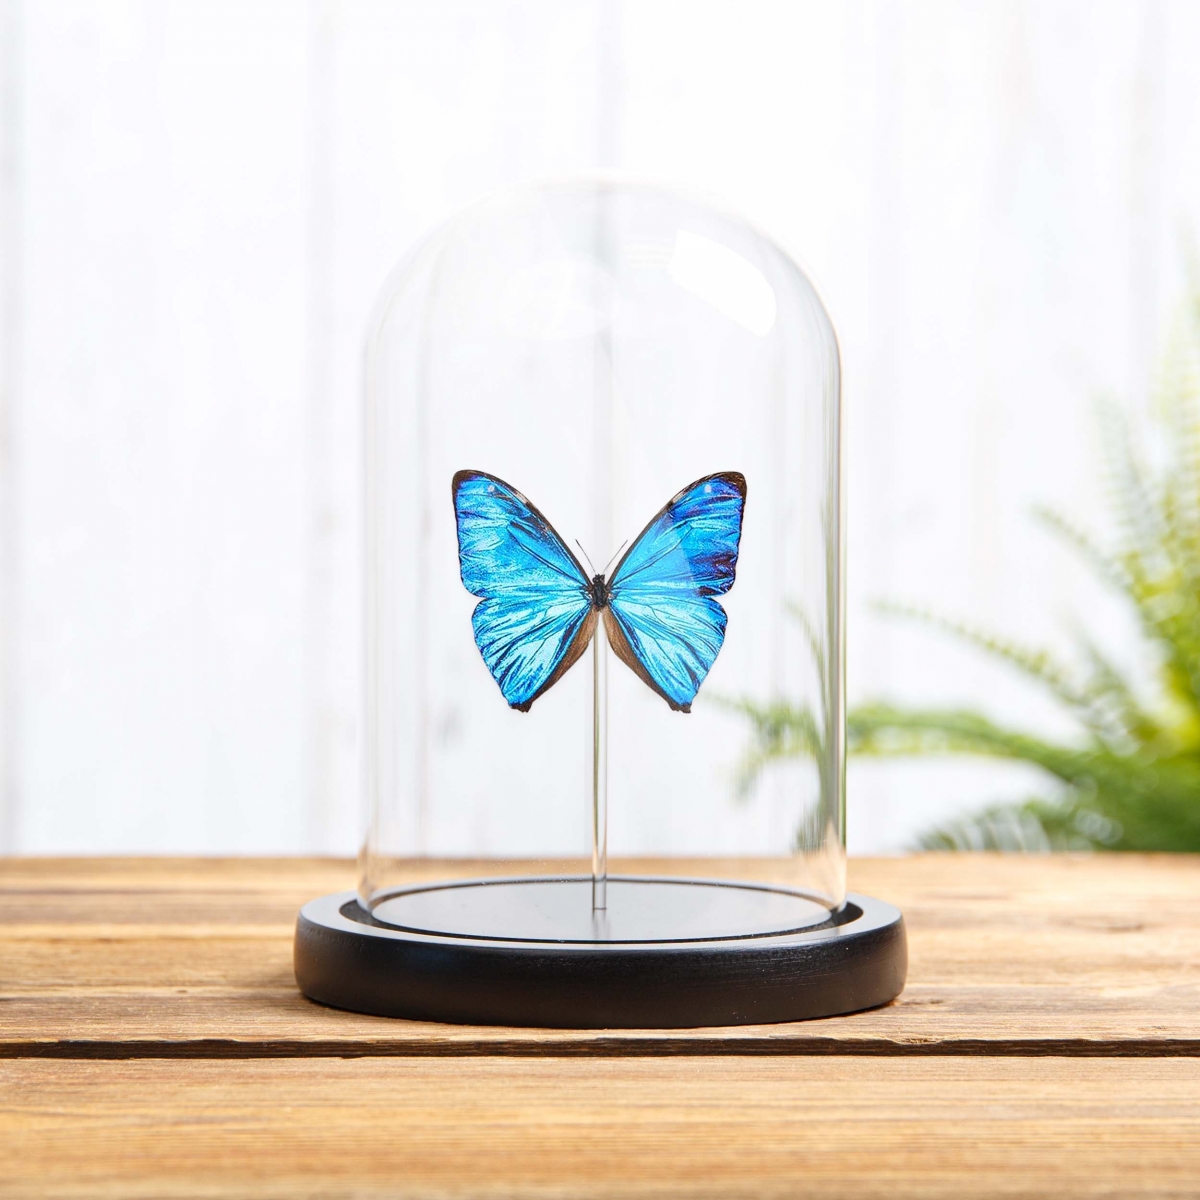 Minibeast Aega Morpho Butterfly in Glass Dome with Wooden Base (Morpho aega)